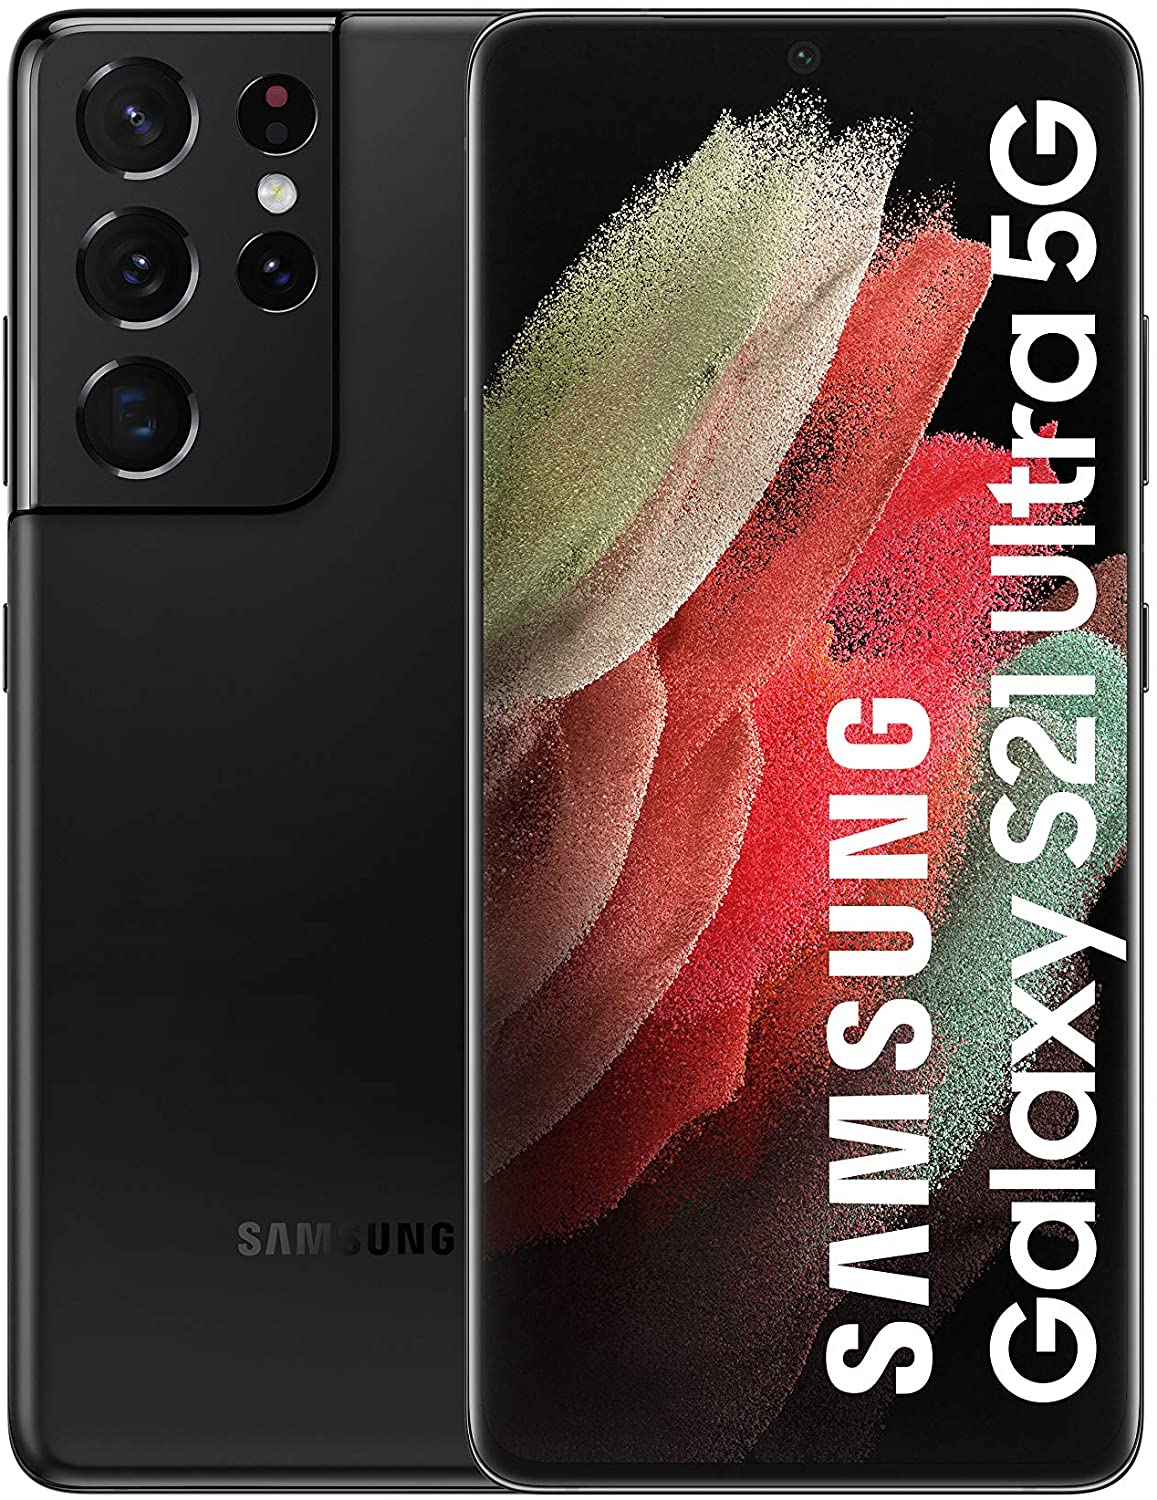 Samsung Galaxy S21 Ultra 12GB/128GB 5G Black Smartphone